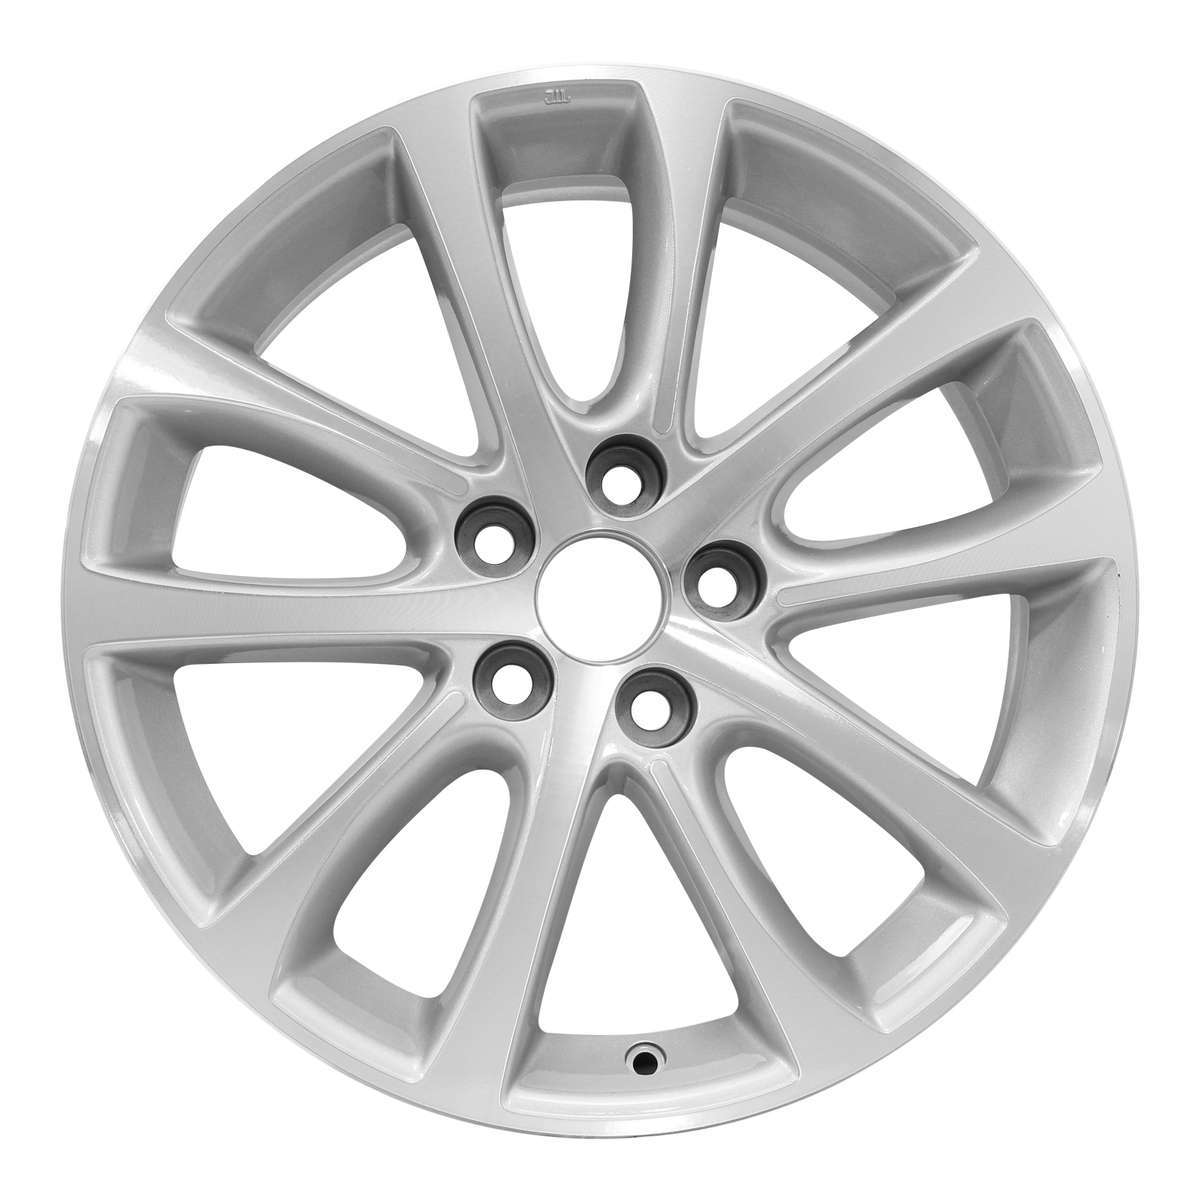 2015 Toyota Avalon New 18" Replacement Wheel Rim RW69624MS